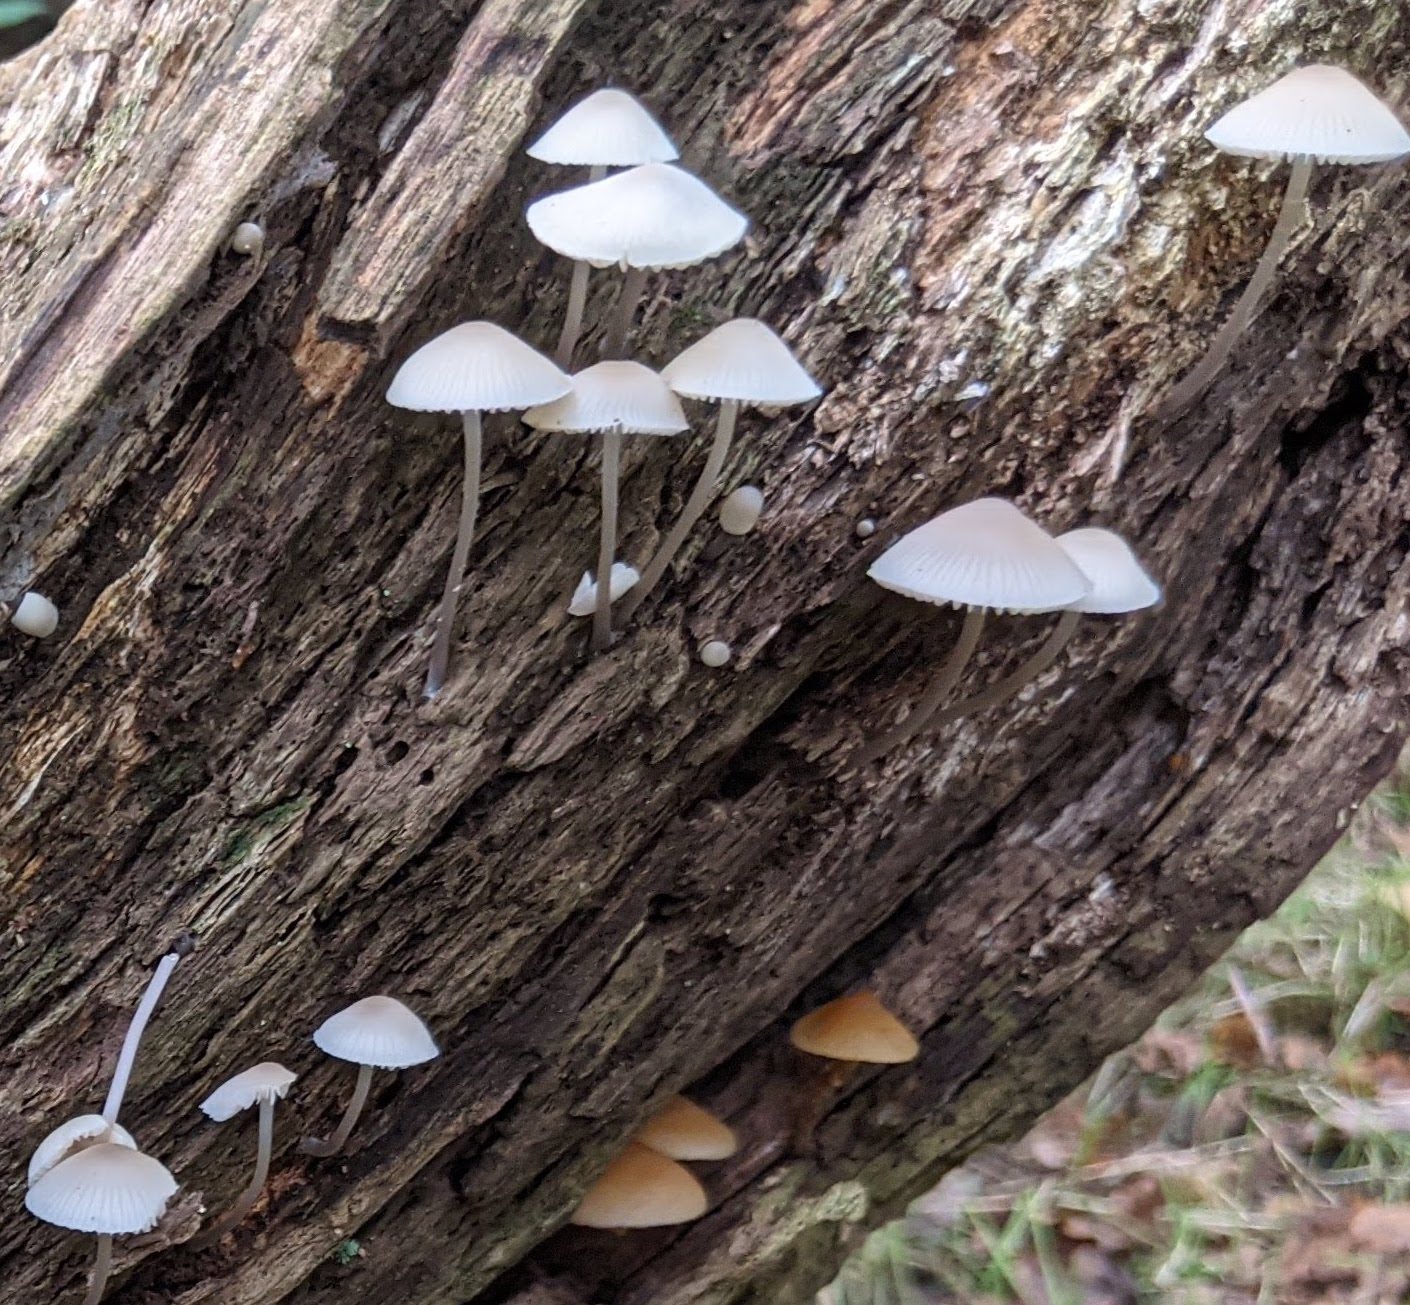 white mushrooms growing on a tree - type of mushroom unknown